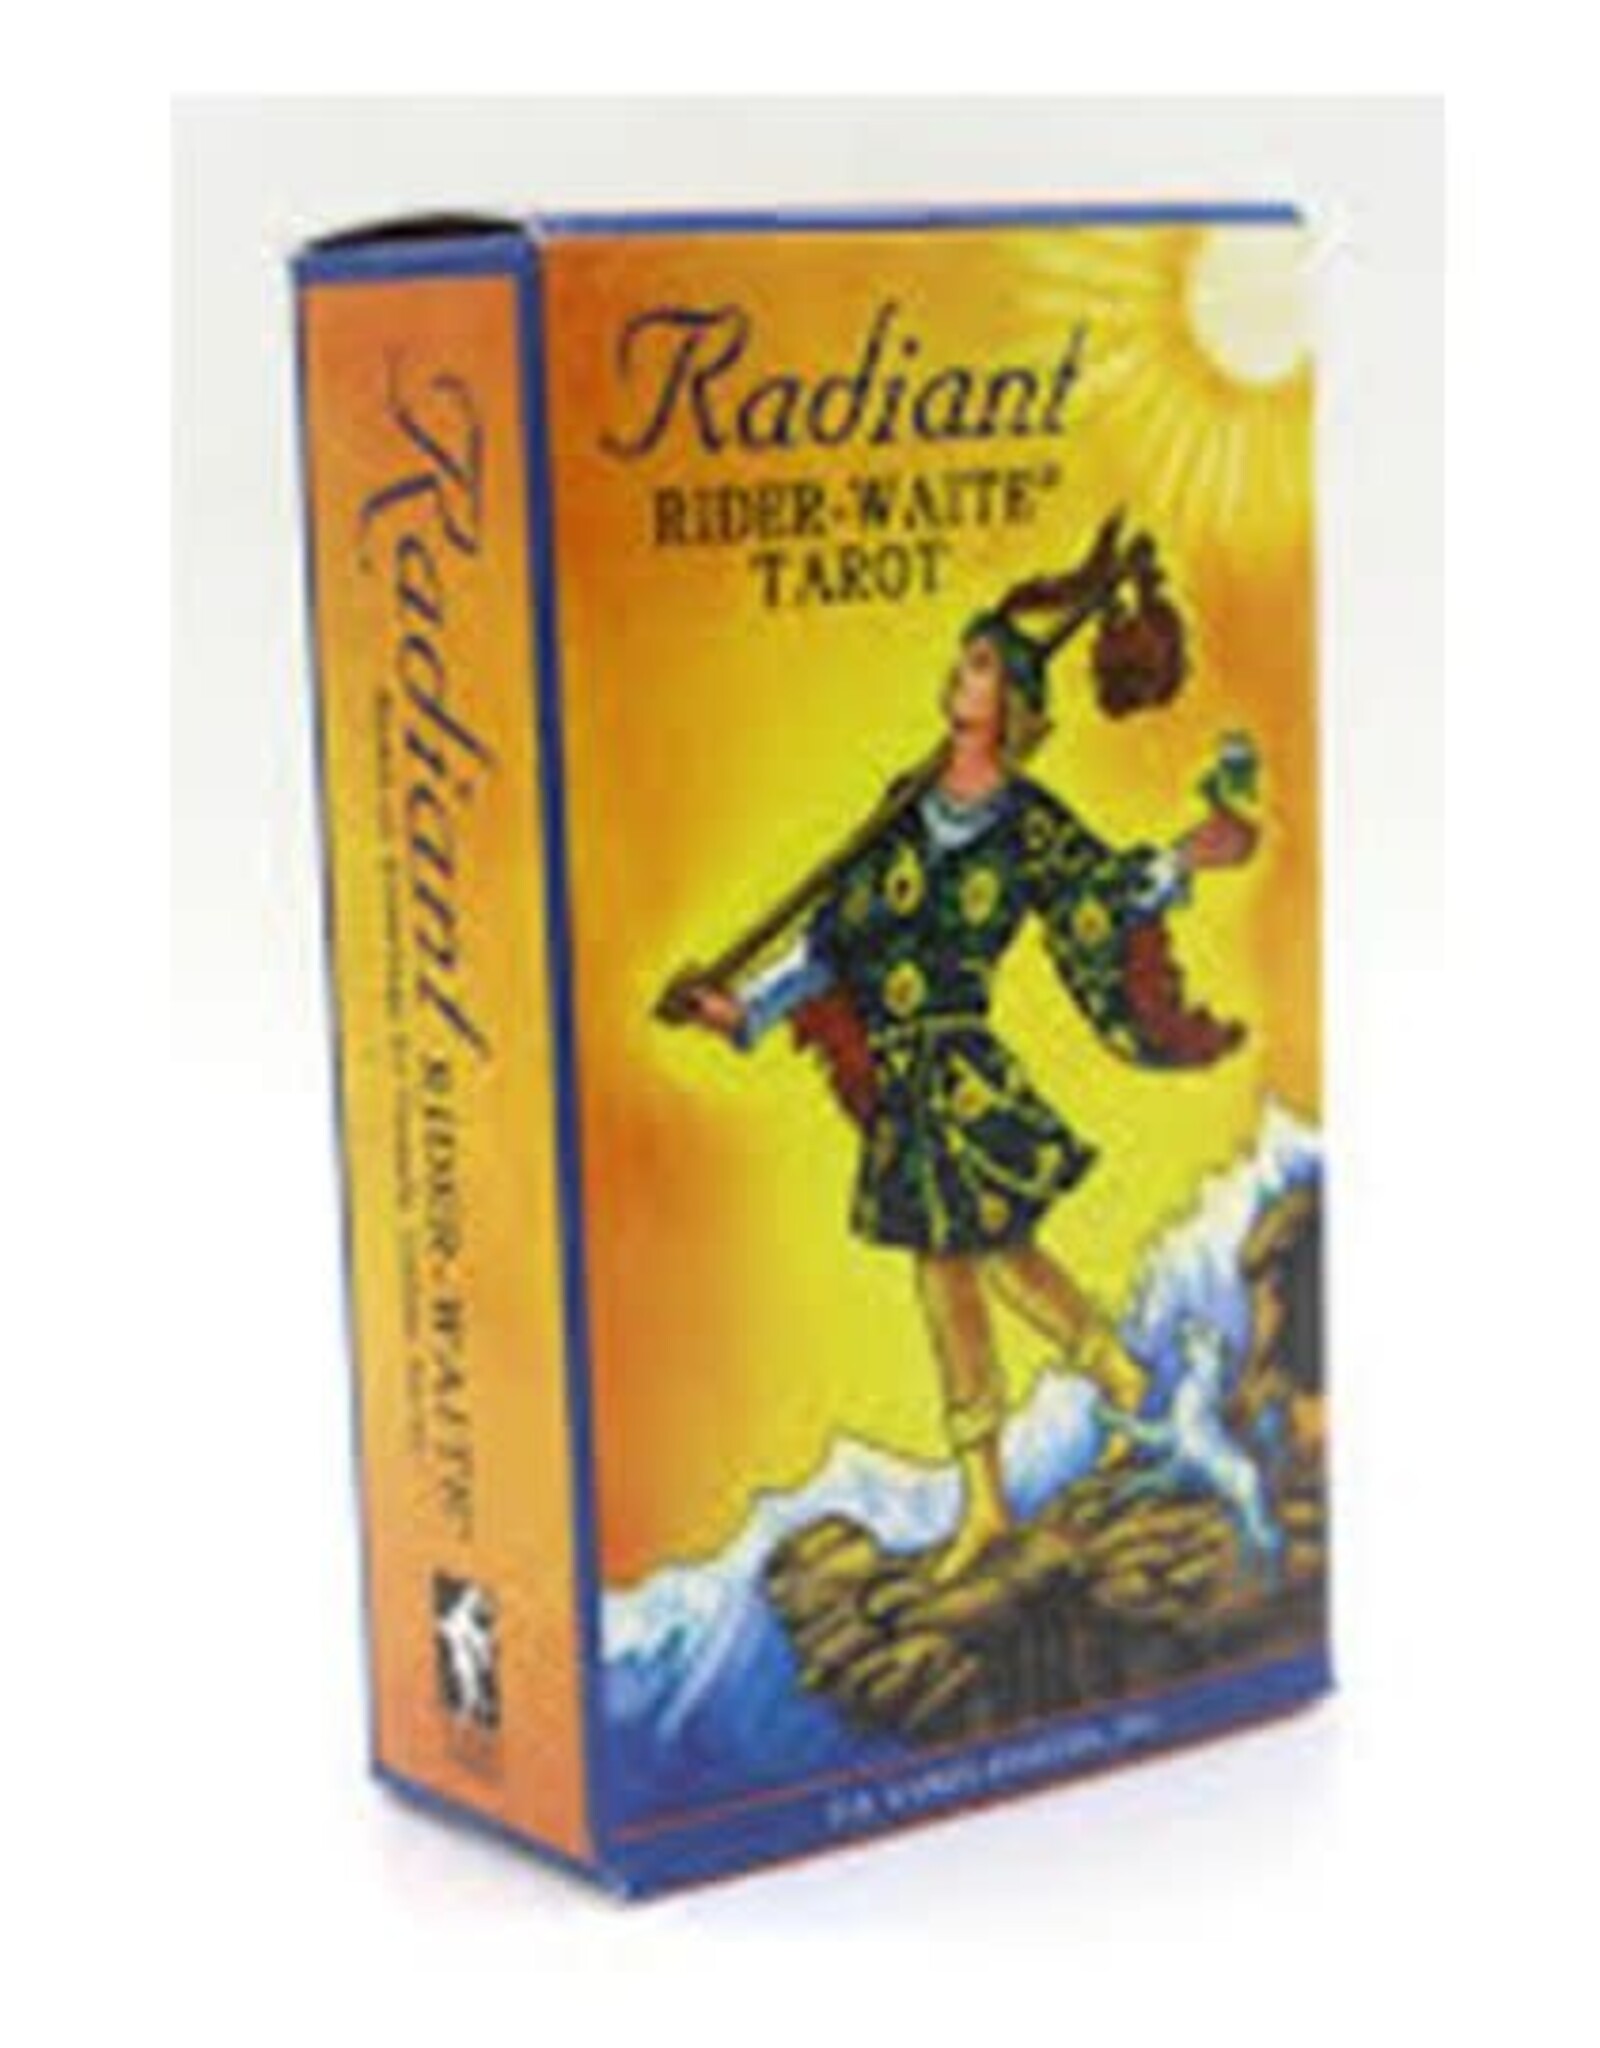 Waite Radiant Rider Waite Tarot by Waite